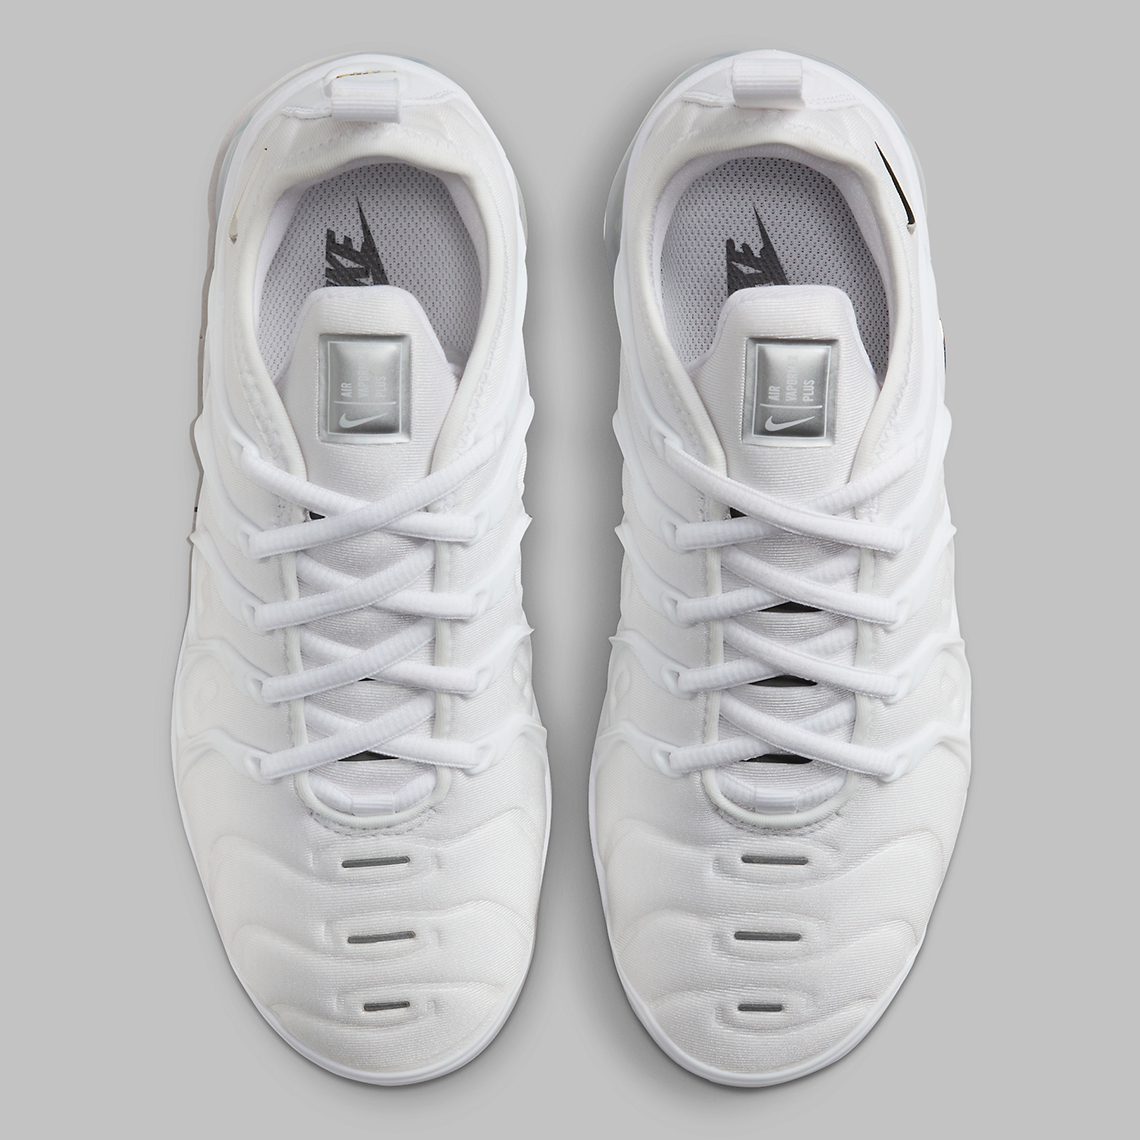 Nike Vapormax Plus White Chrome Fq8895 100 4